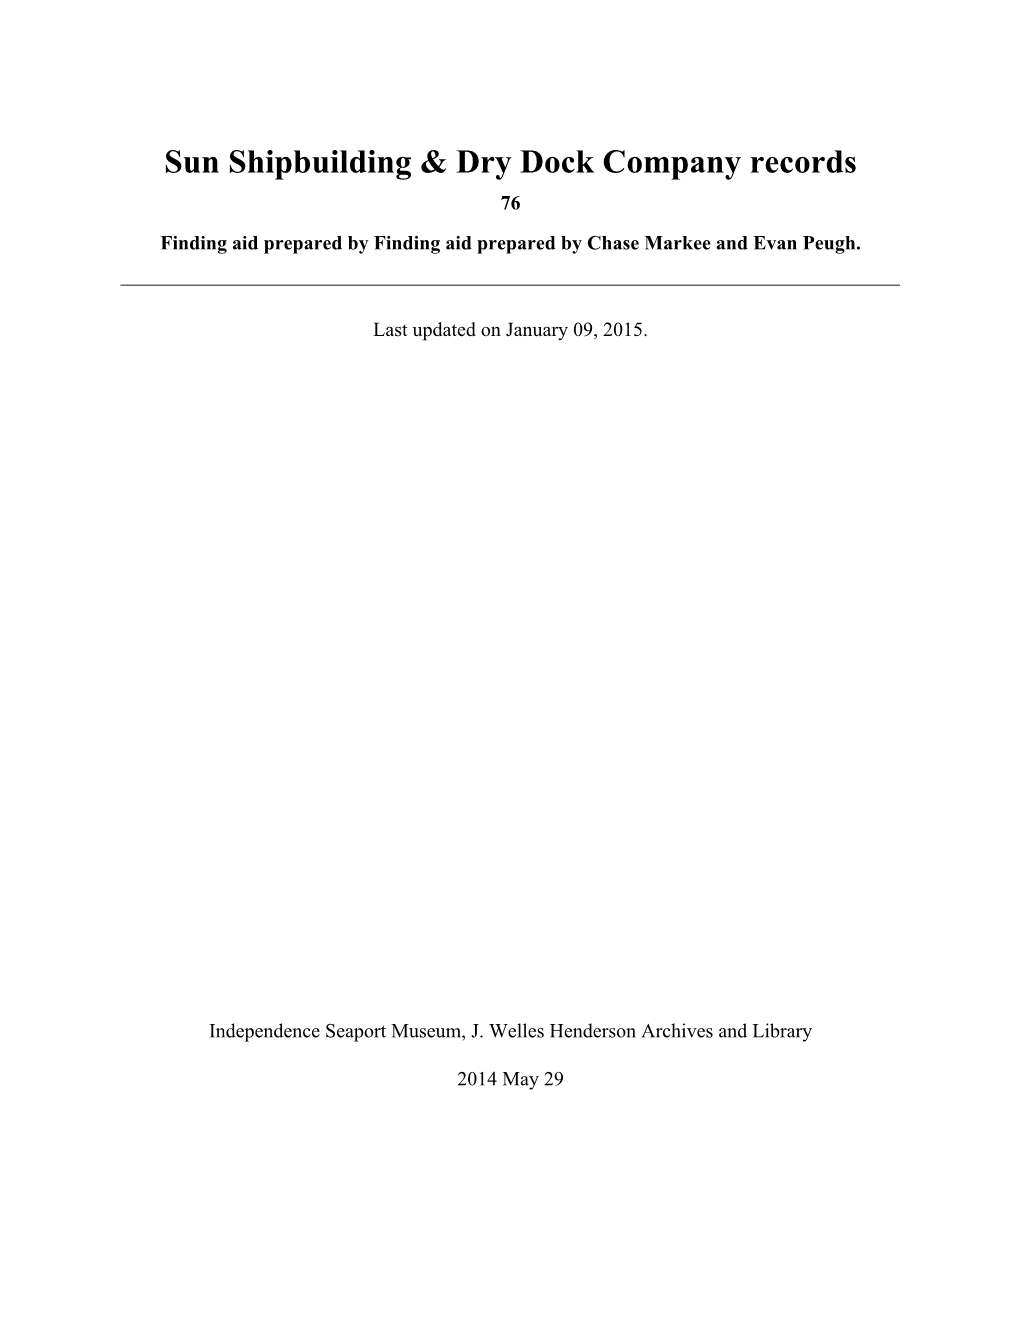 Sun Shipbuilding & Dry Dock Company Records